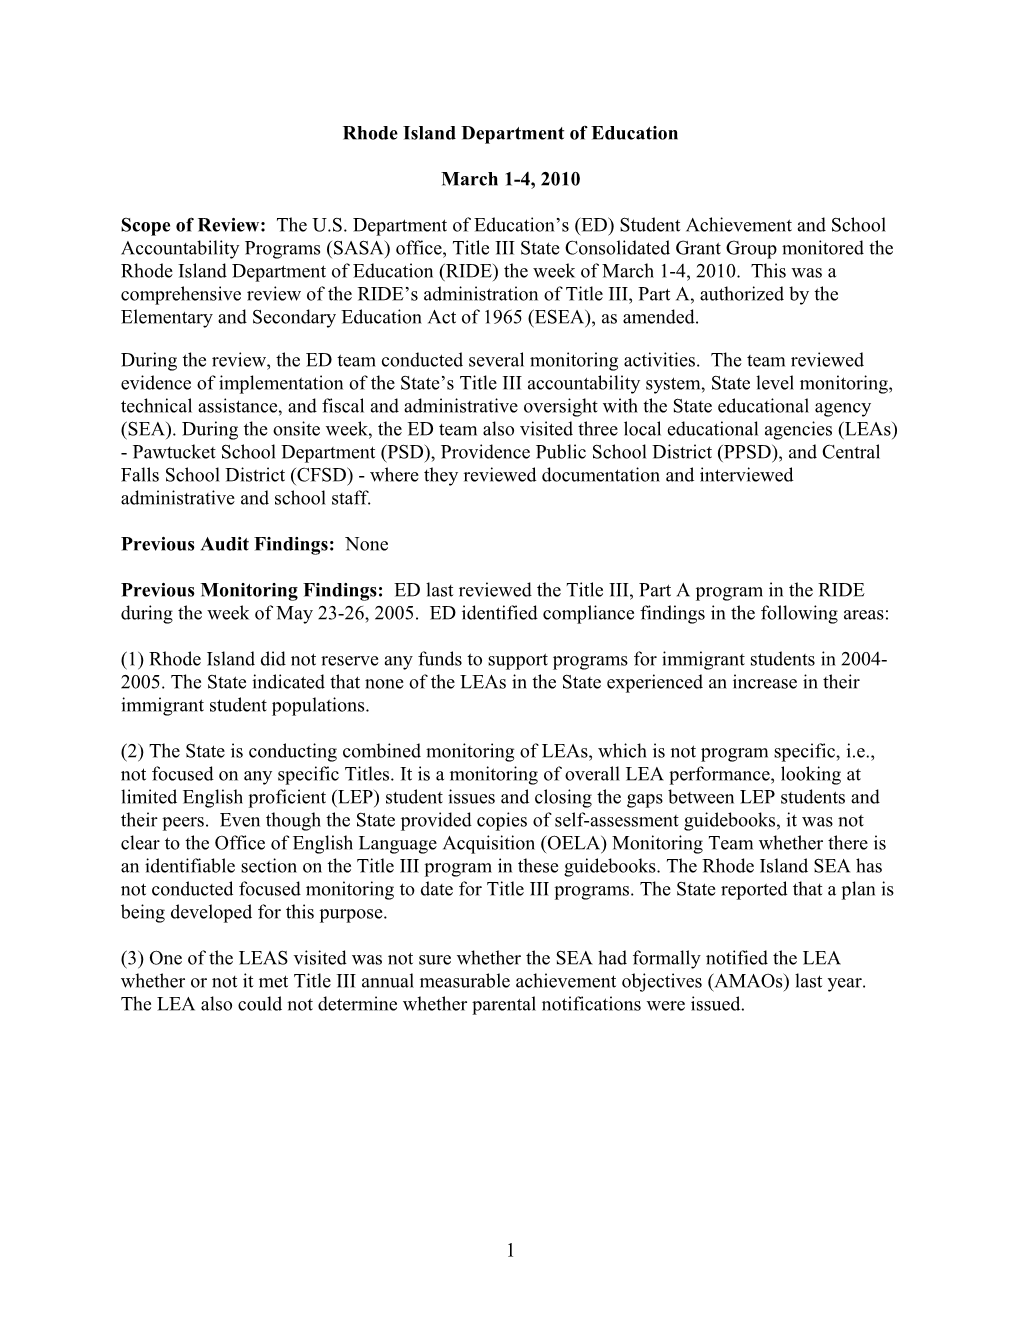 Title III Rhode Island Monitoring Report 3/1-4/10 (MS Word)